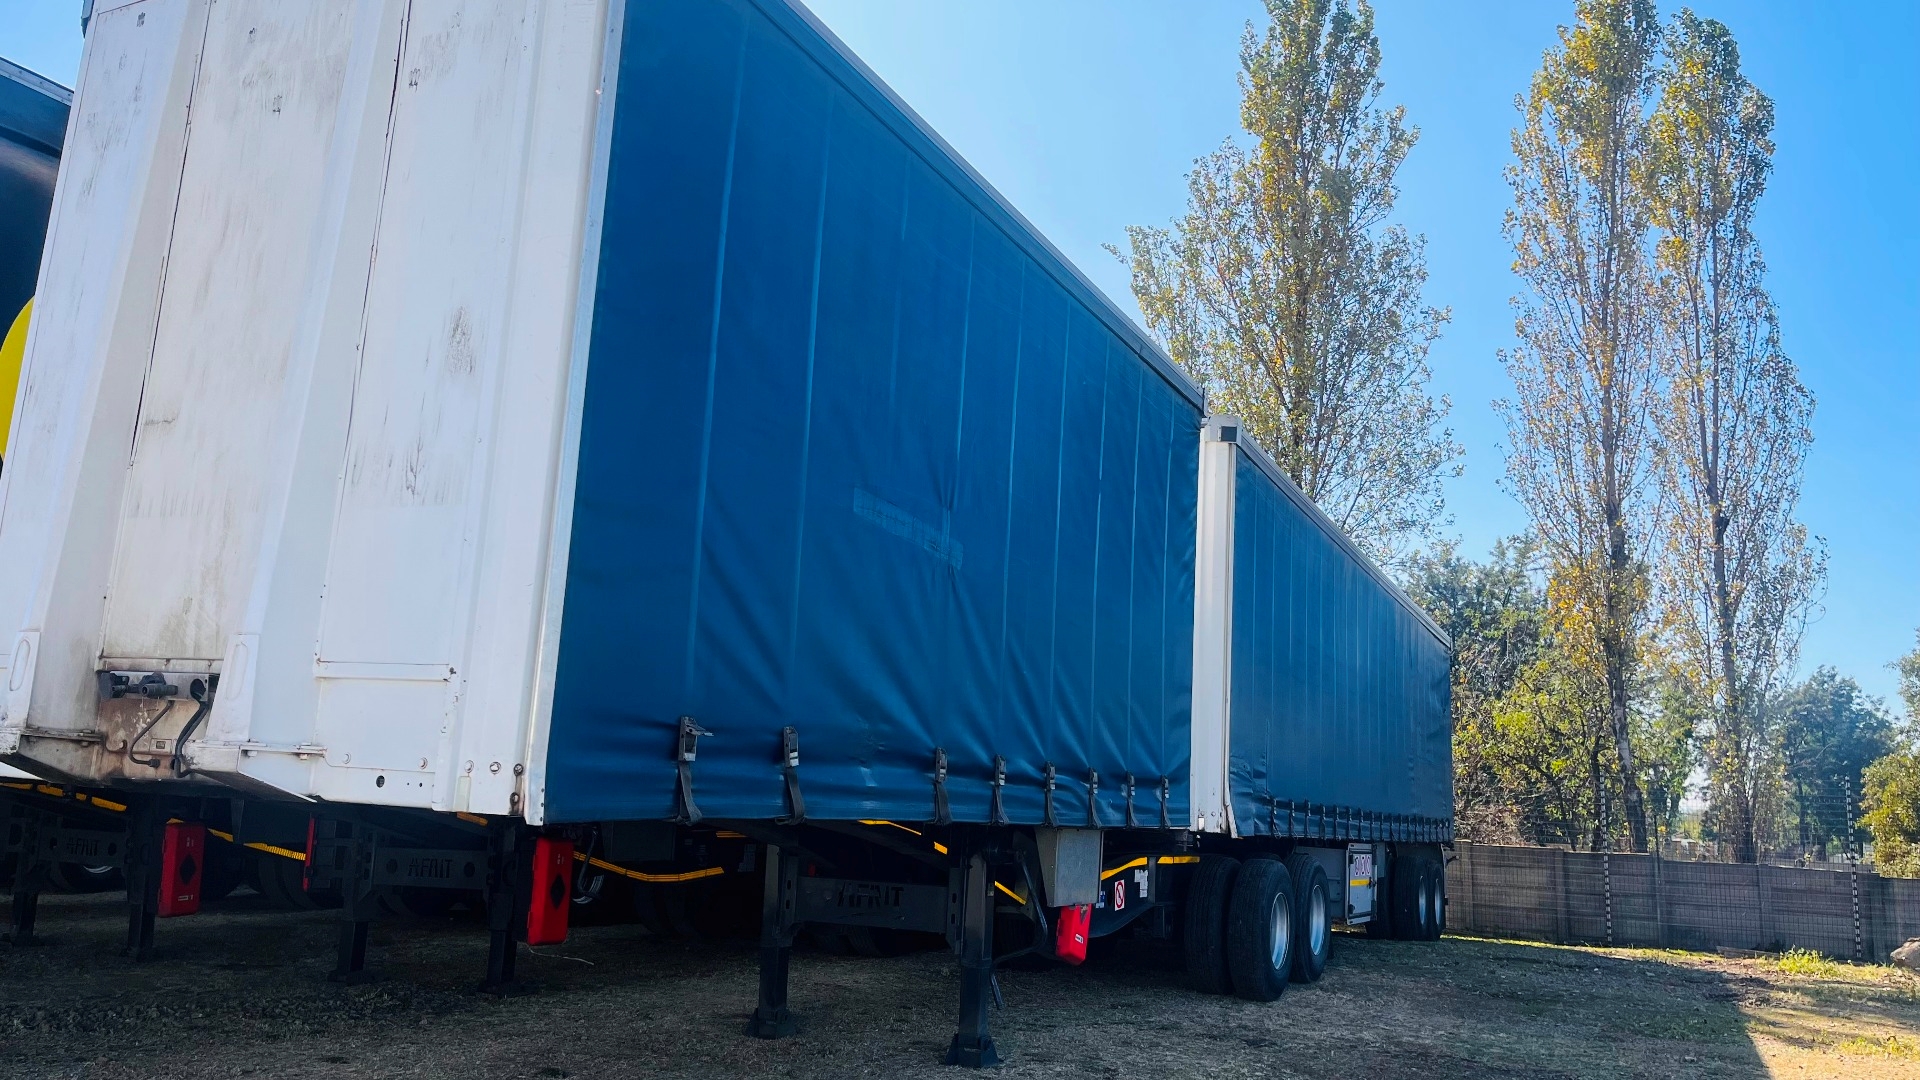 Afrit Trailers Tautliner SUPER LINK 2018 for sale by Pomona Road Truck Sales | Truck & Trailer Marketplaces